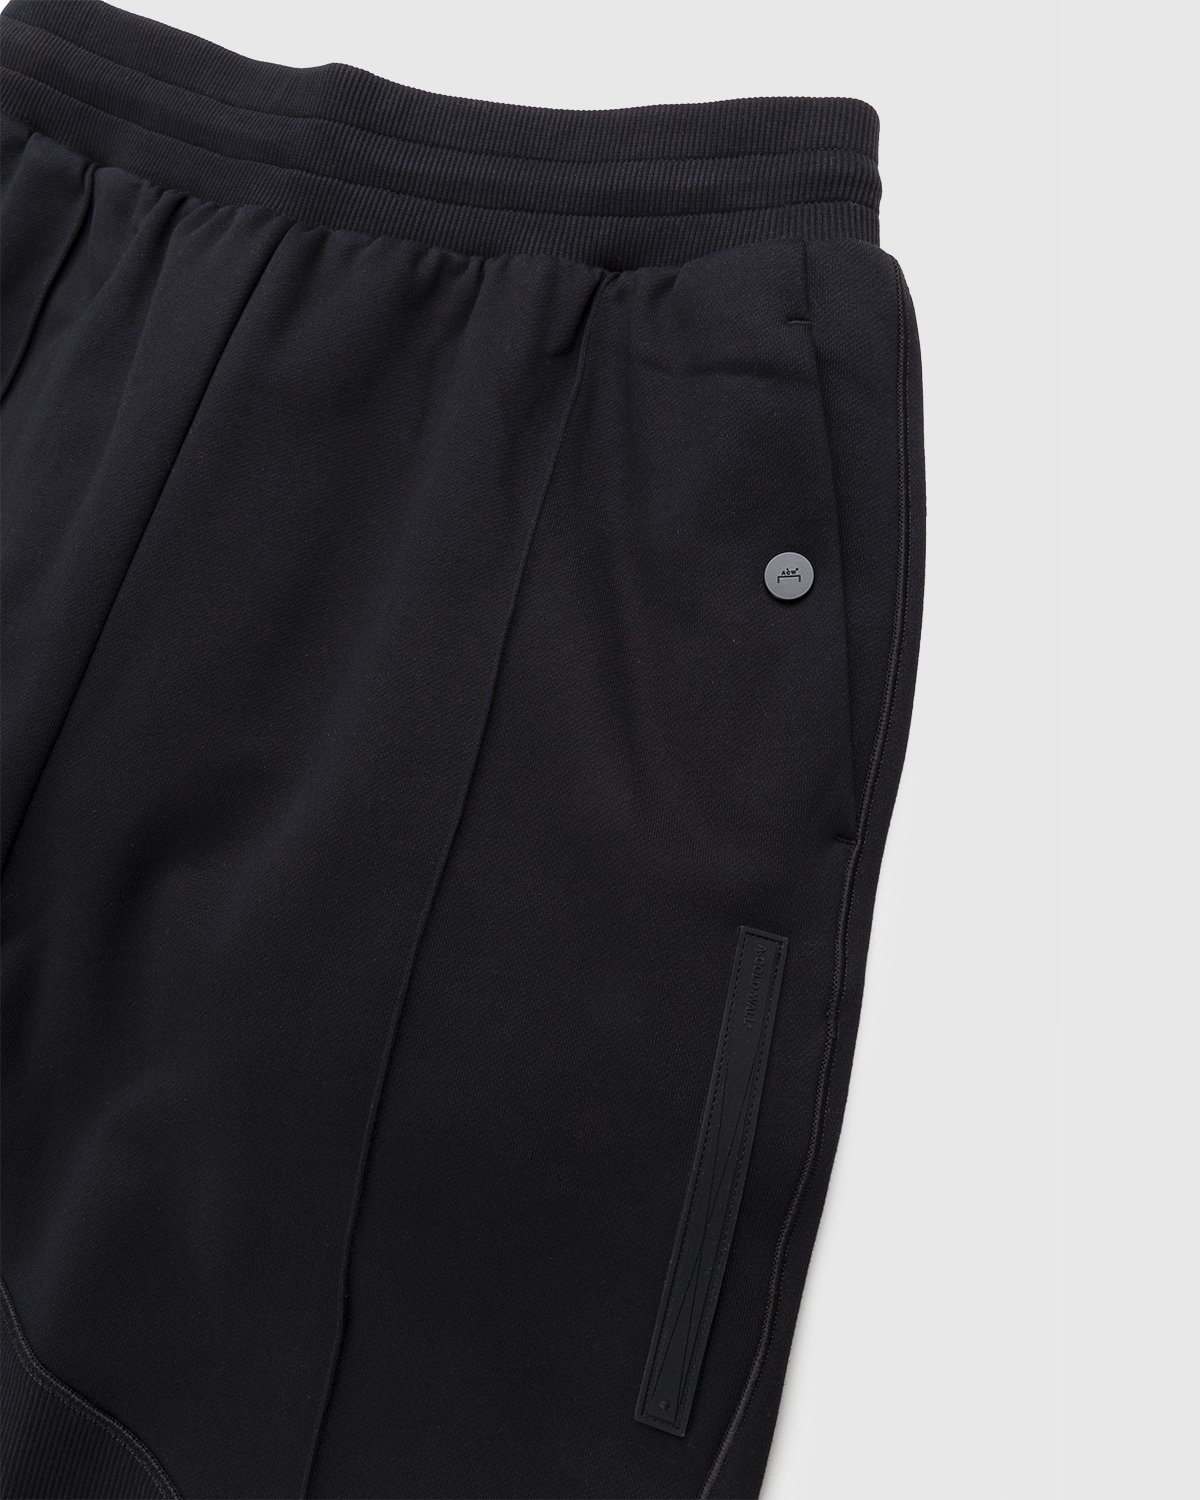 A-Cold-Wall* - Granular Sweatpants Black - Clothing - Black - Image 5